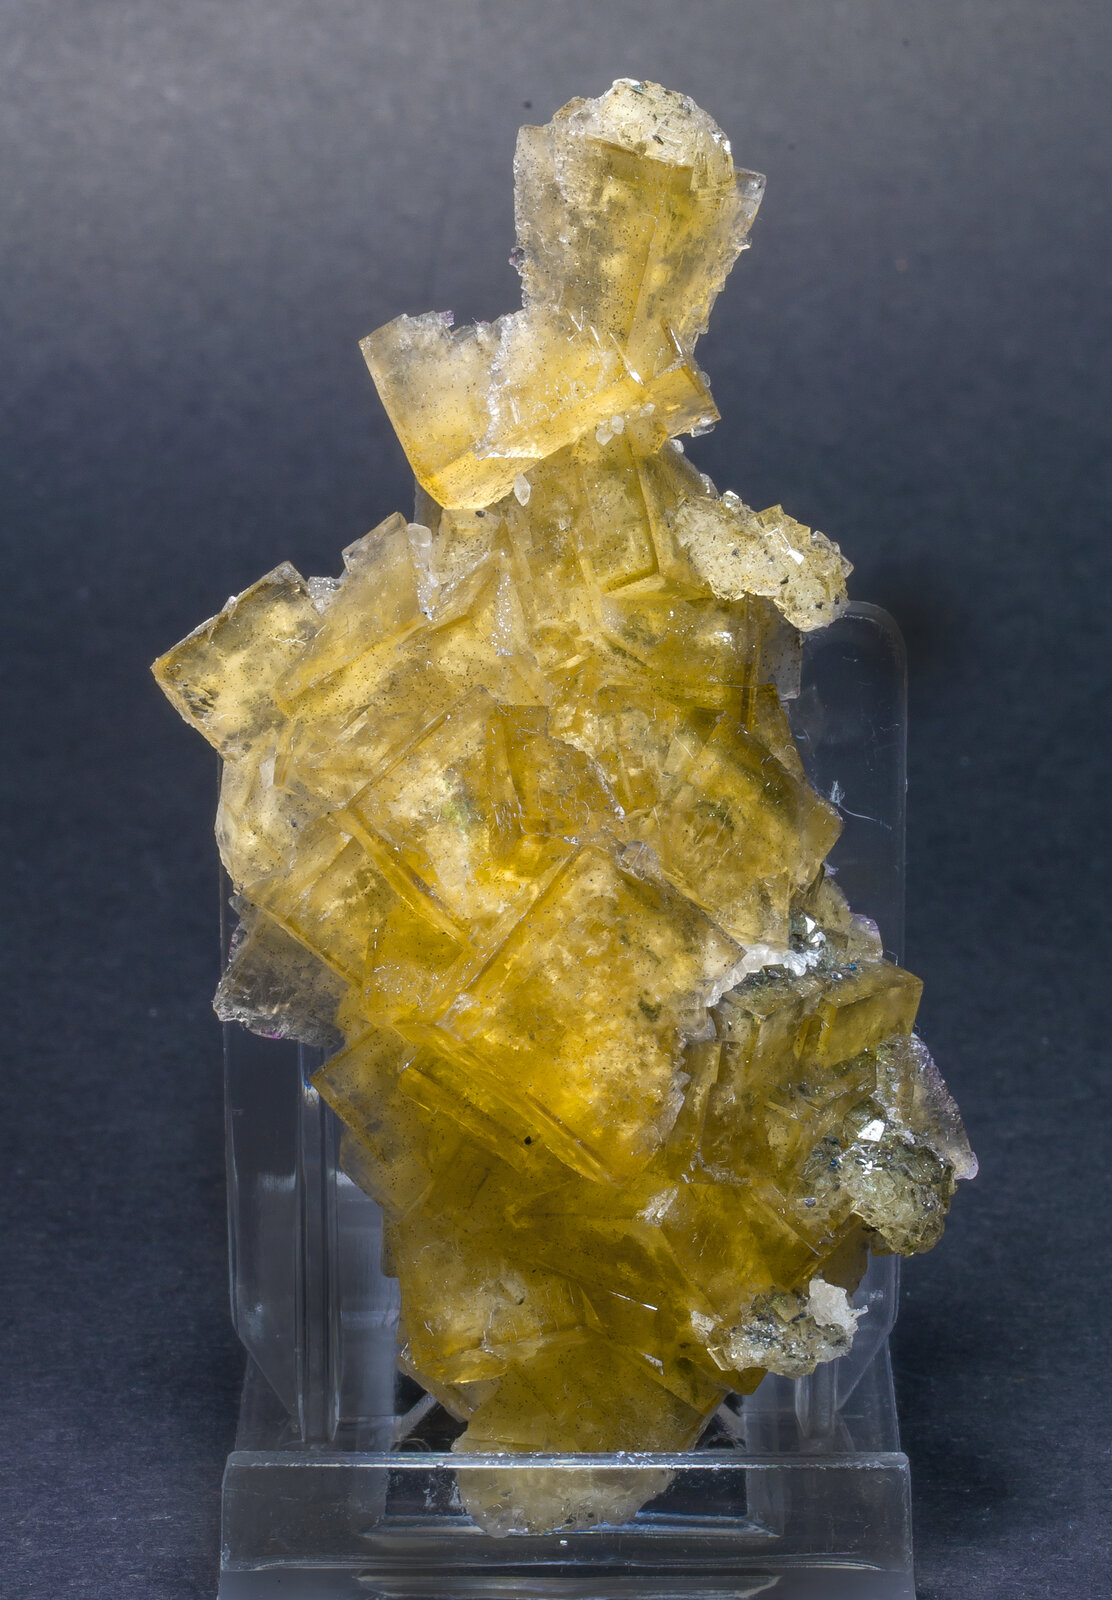 specimens/s_imagesAM8/Fluorite-NA13AM8f.jpg